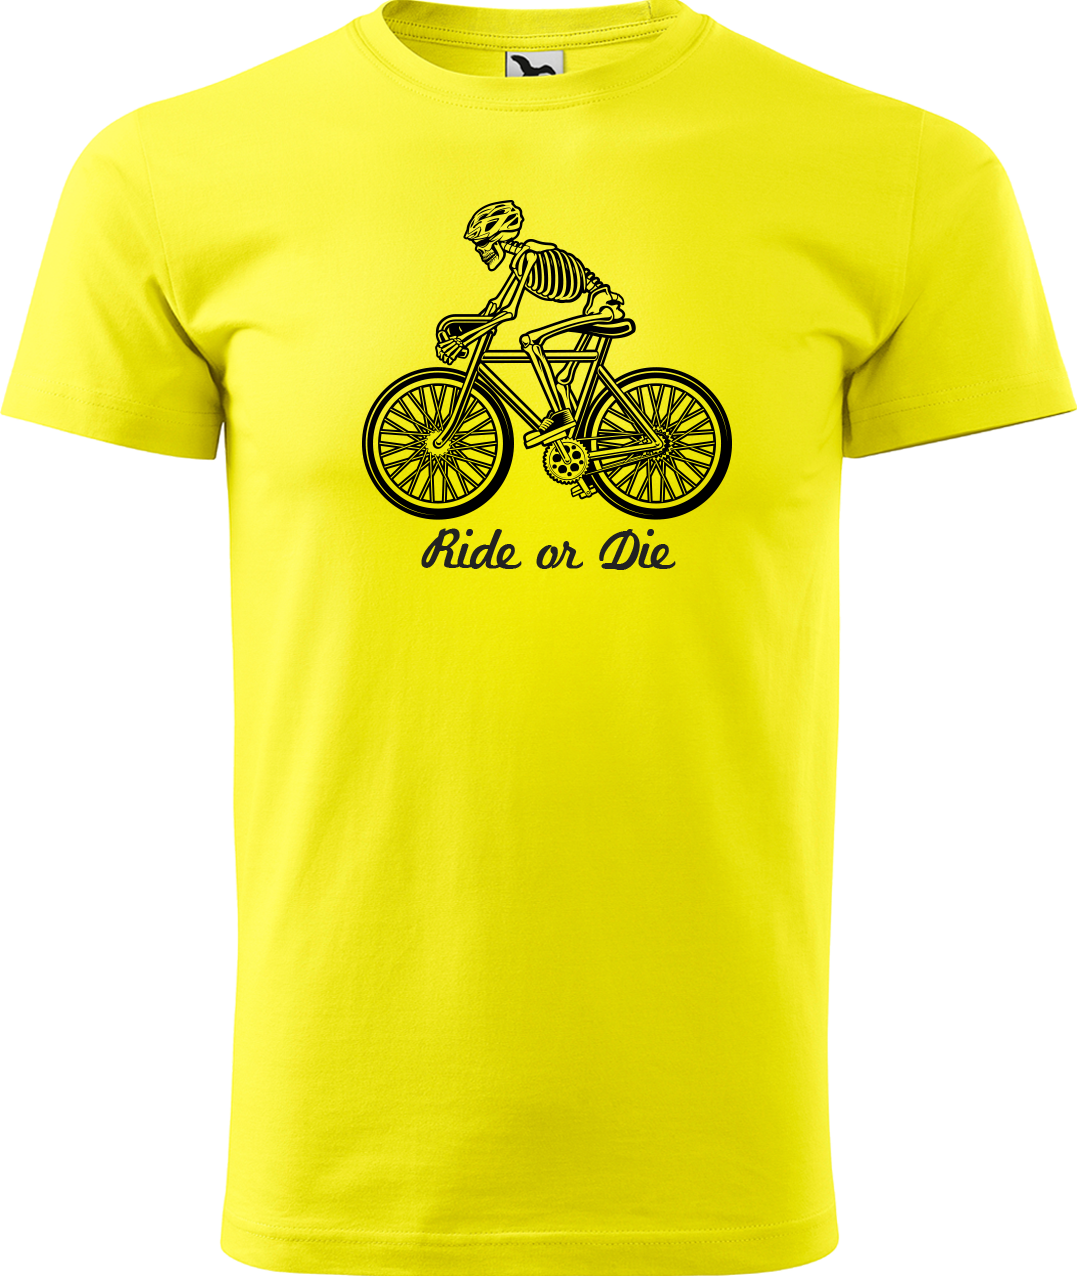 Pánské tričko pro cyklistu - Ride or Die Velikost: 3XL, Barva: Žlutá (04)